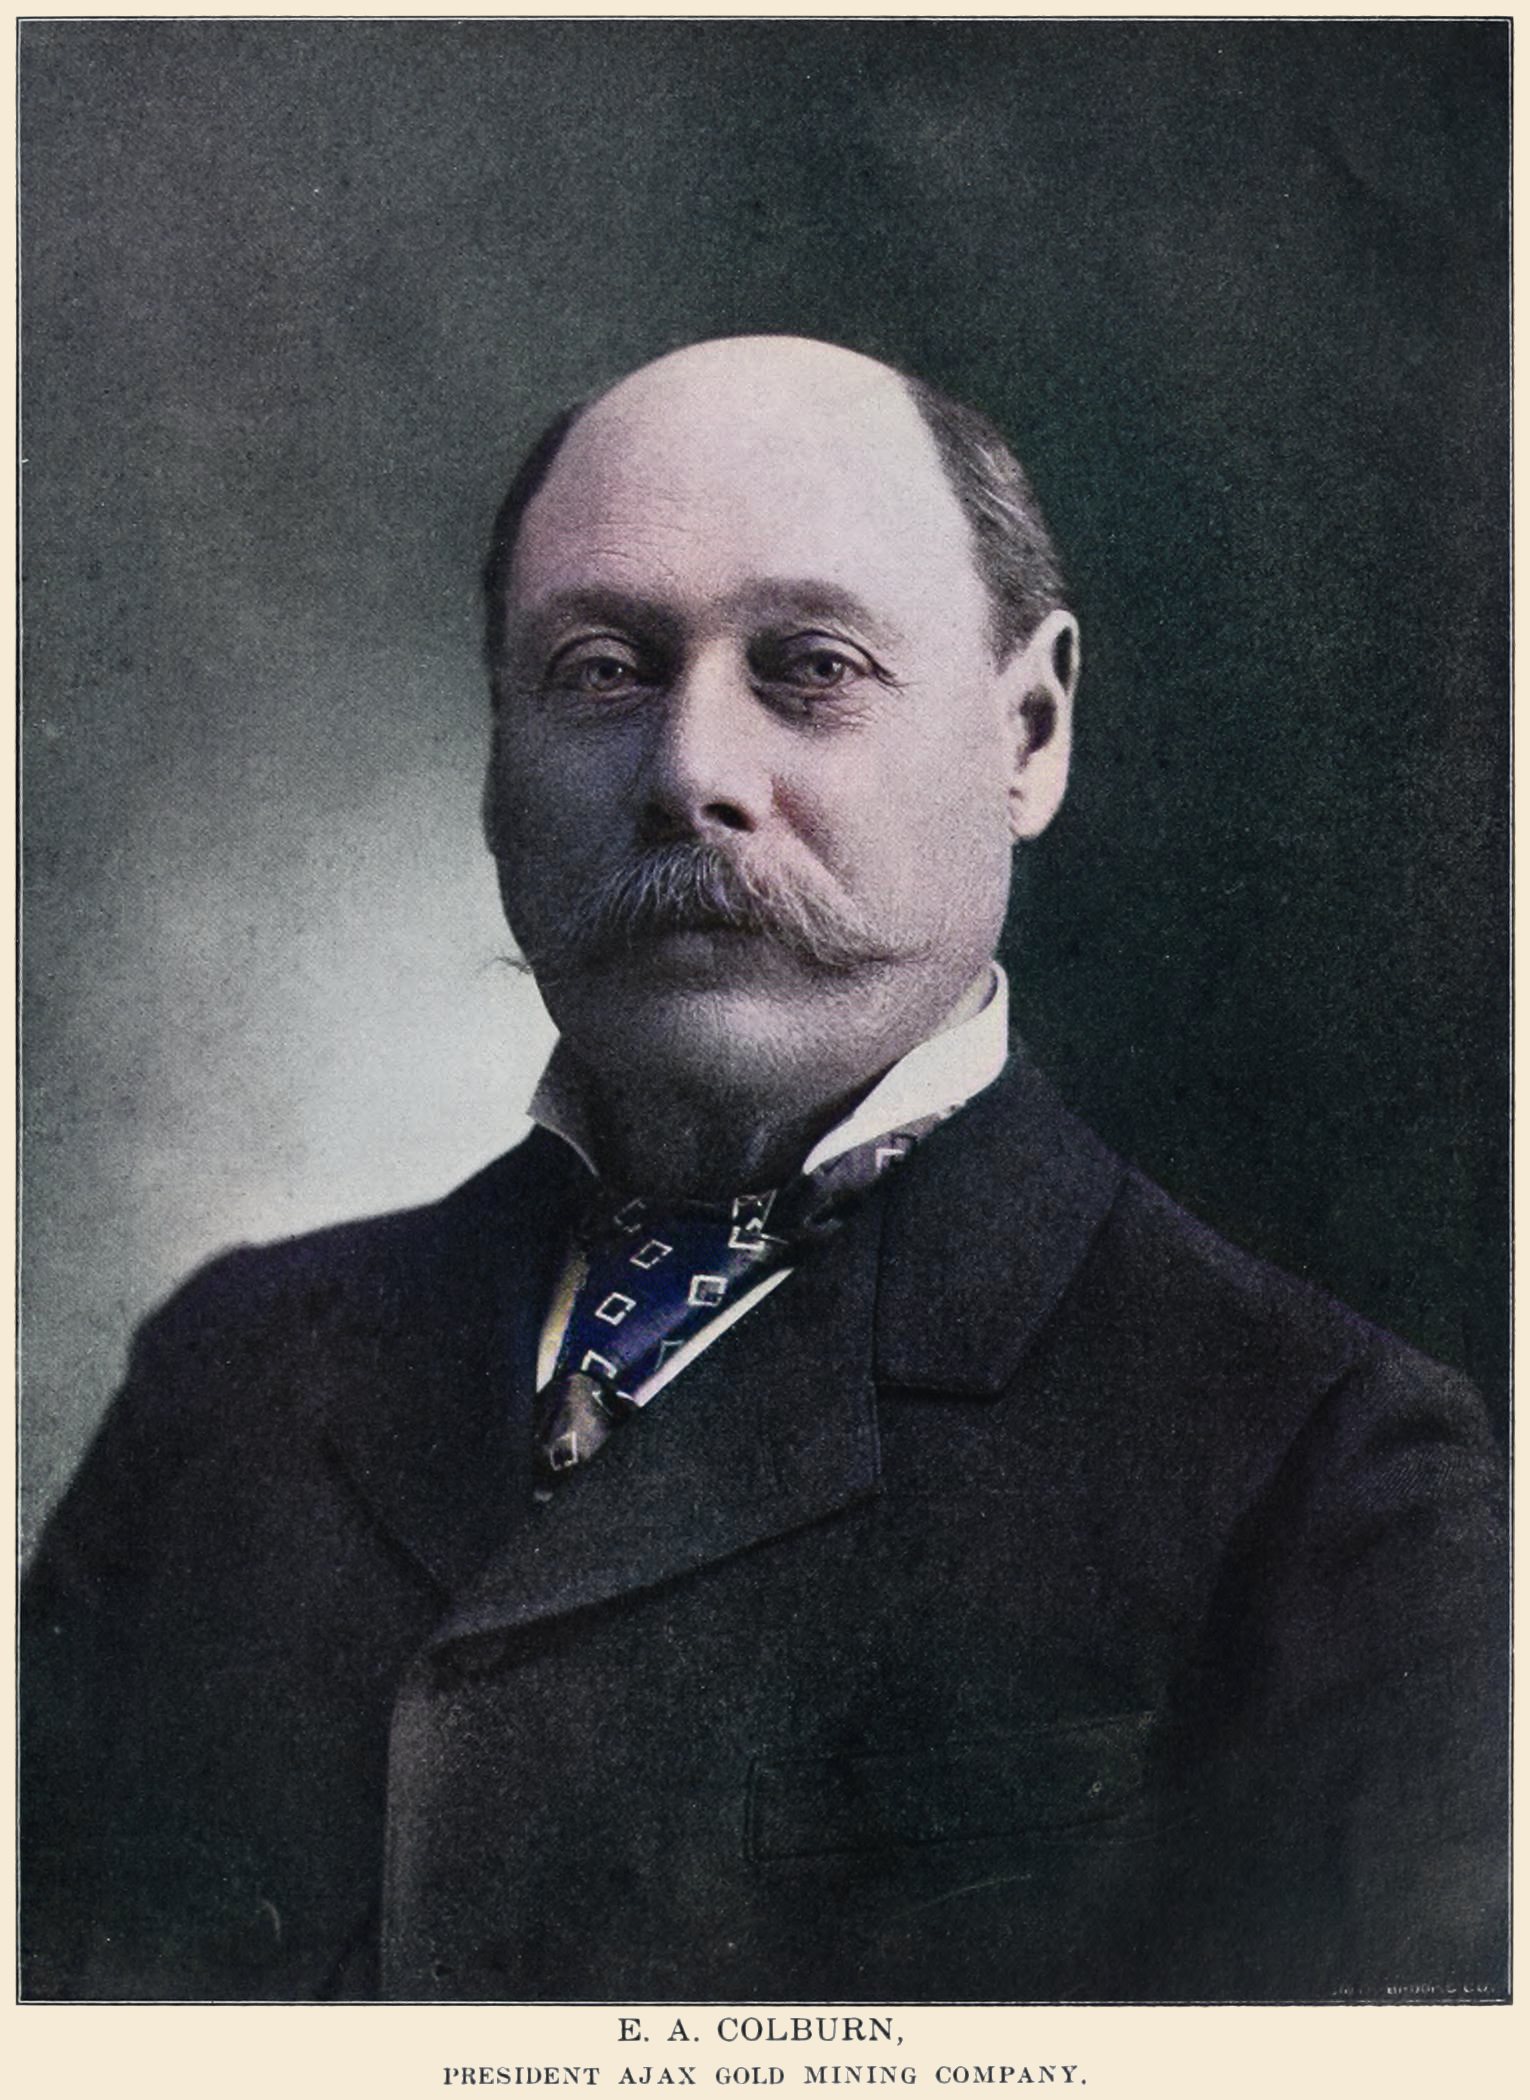 E. A. Colburn, President Ajax Gold Mining Company.